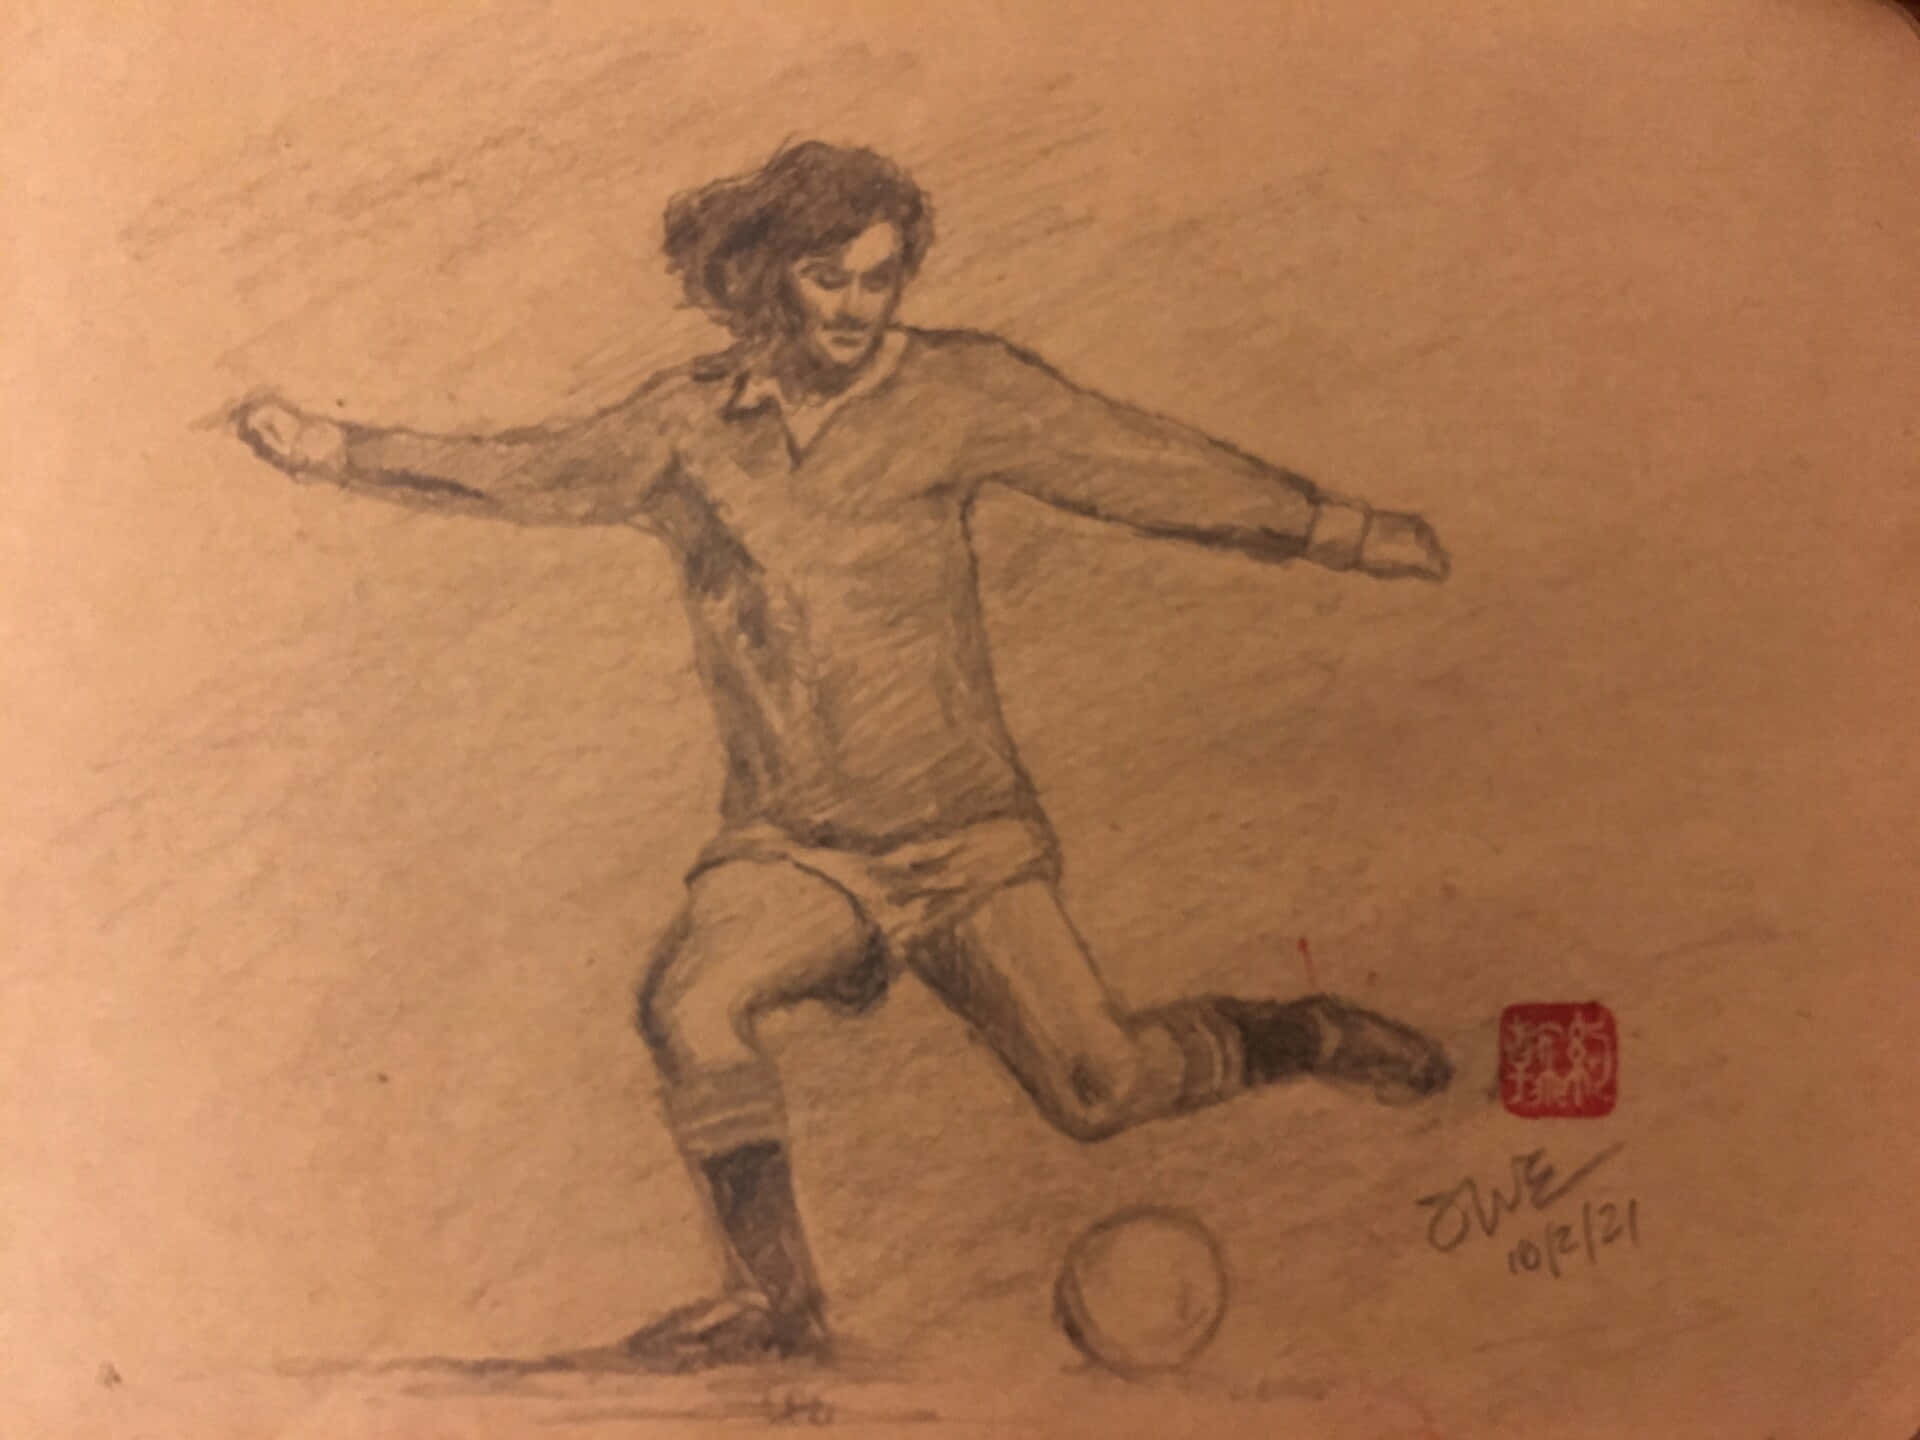 Irish Football Player George Best Sketch Wallpaper